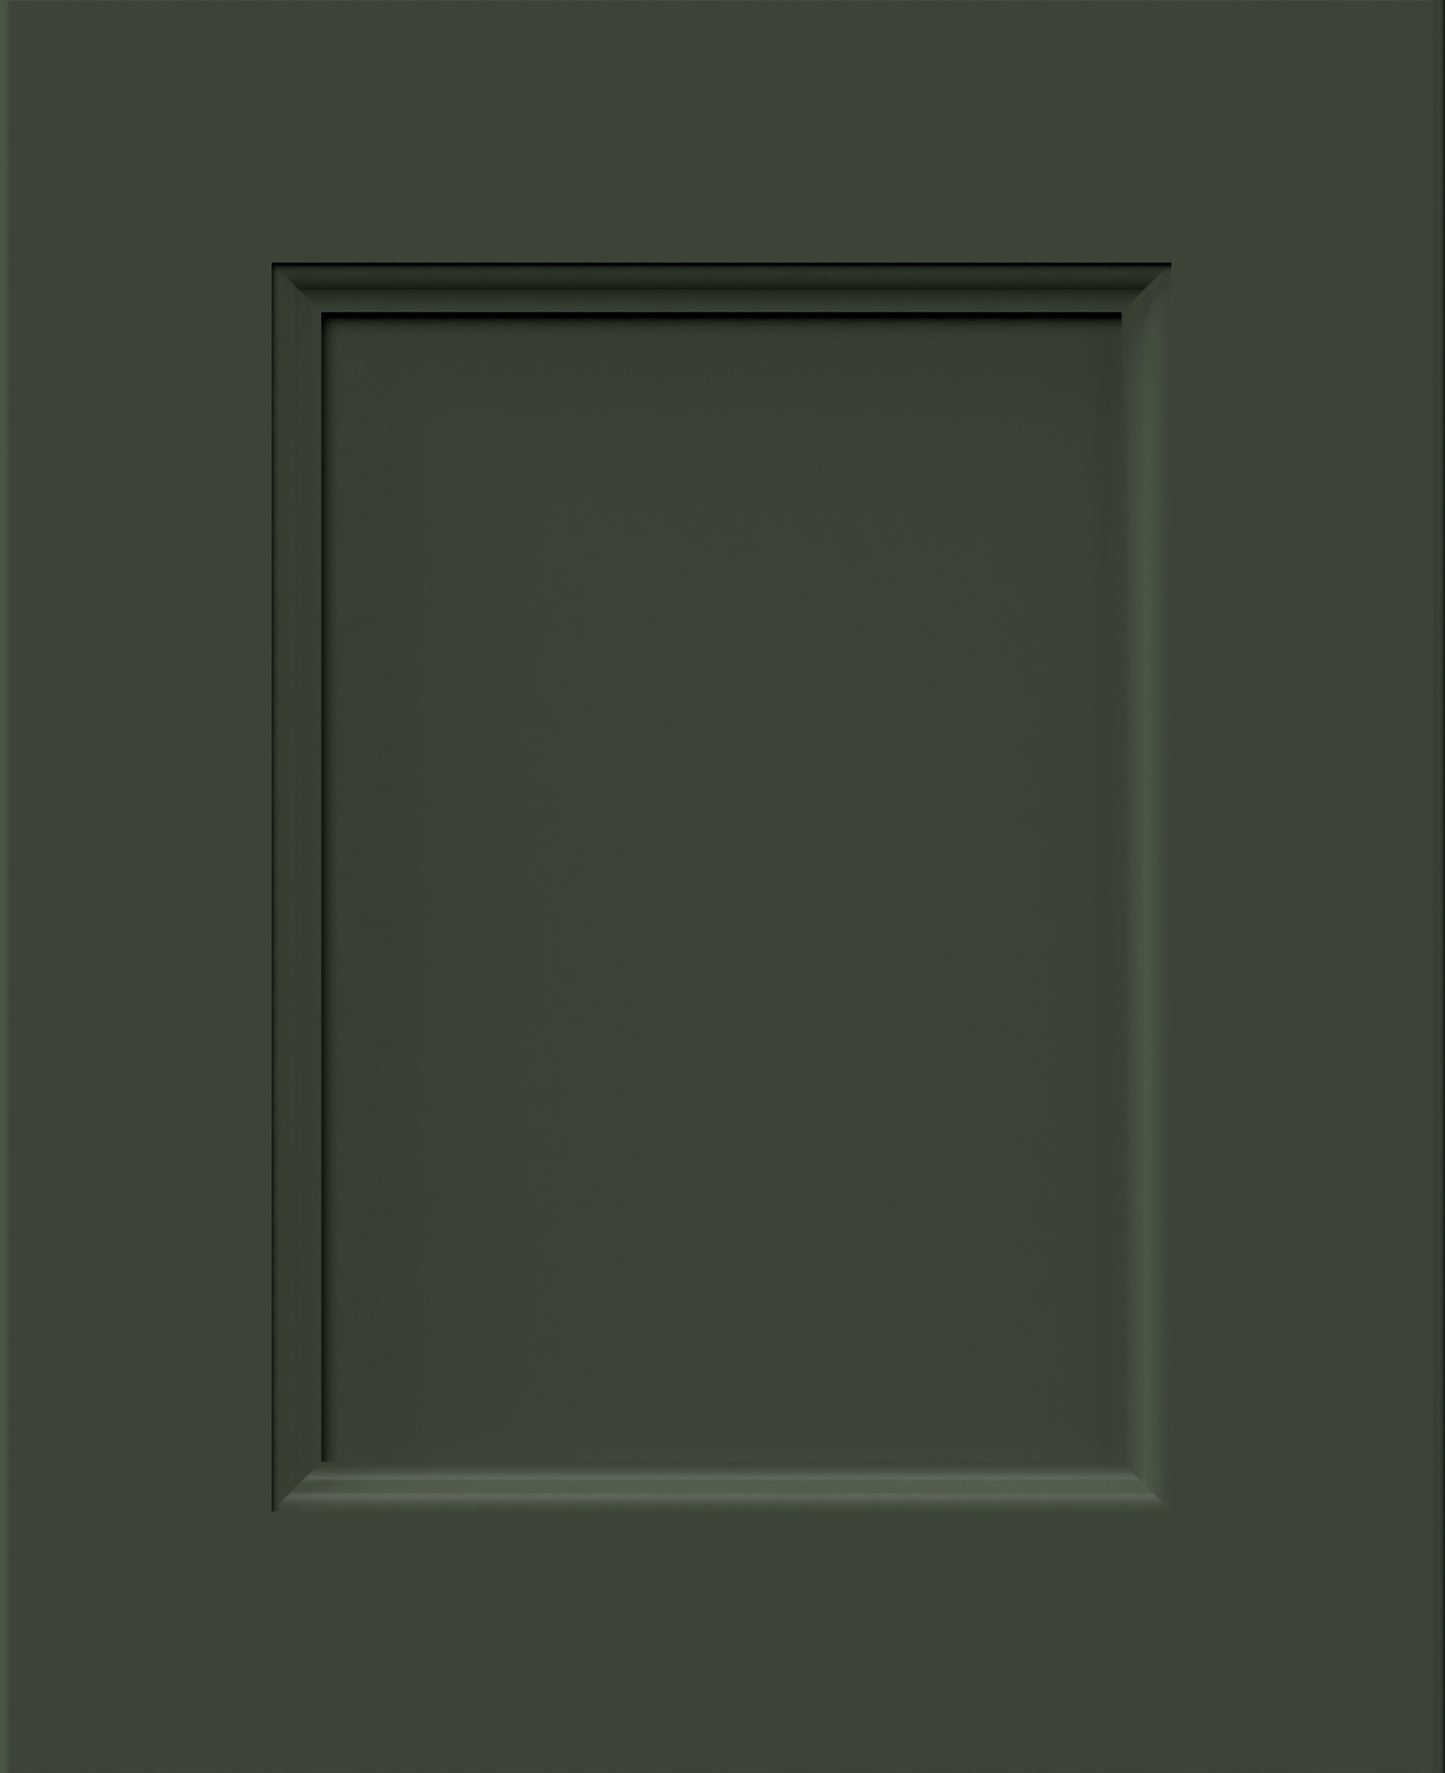 Fabuwood Nexus Hunter Green small sample door. a recessed cabinet door in a hunter green painted finish.